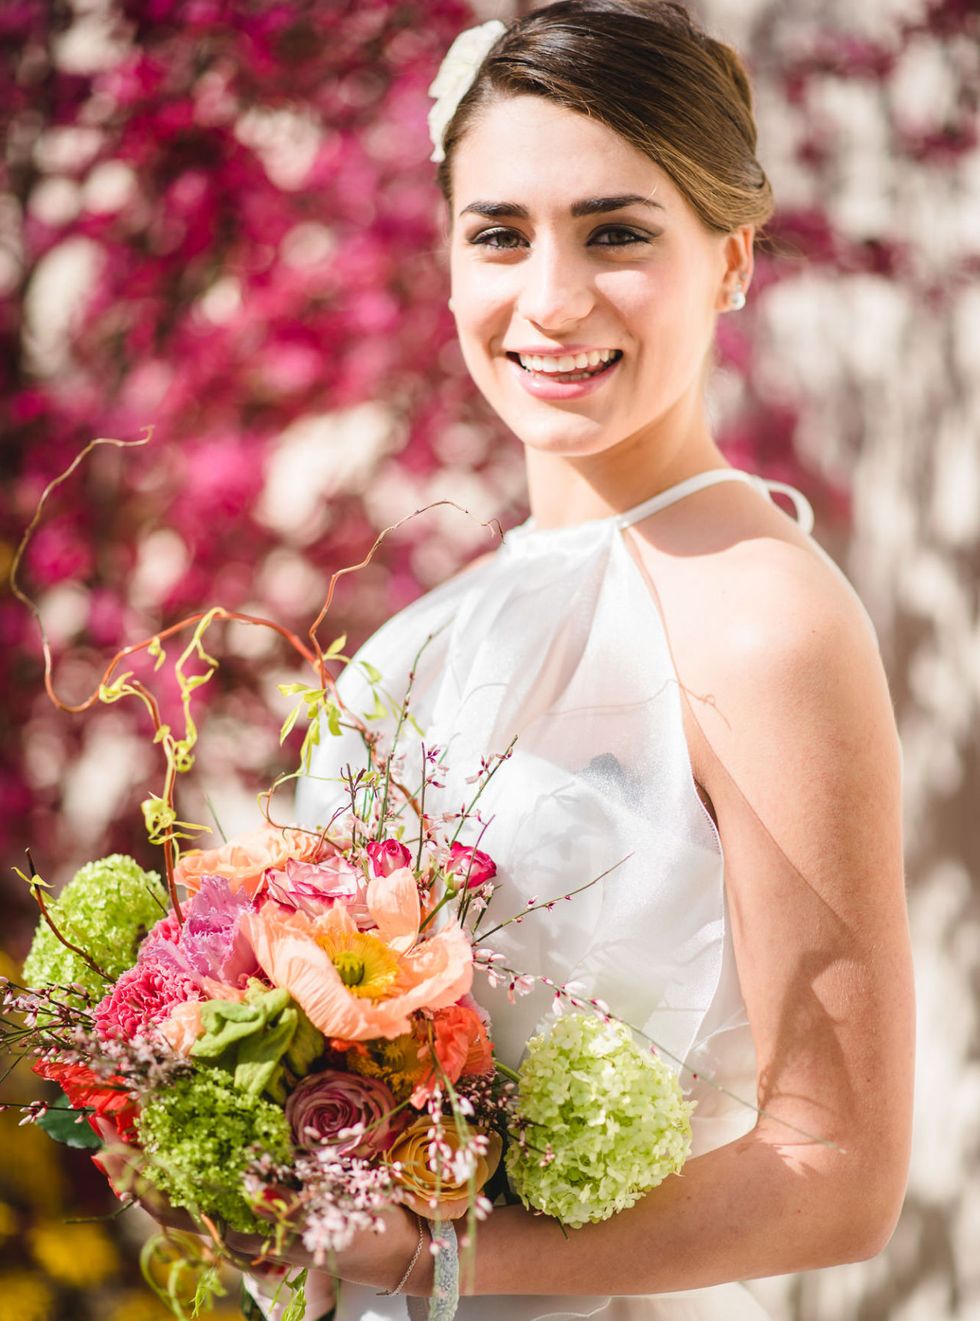 Petal, Eye, Bouquet, Dress, Flower, Photograph, Bridal clothing, Happy, Cut flowers, Facial expression, 